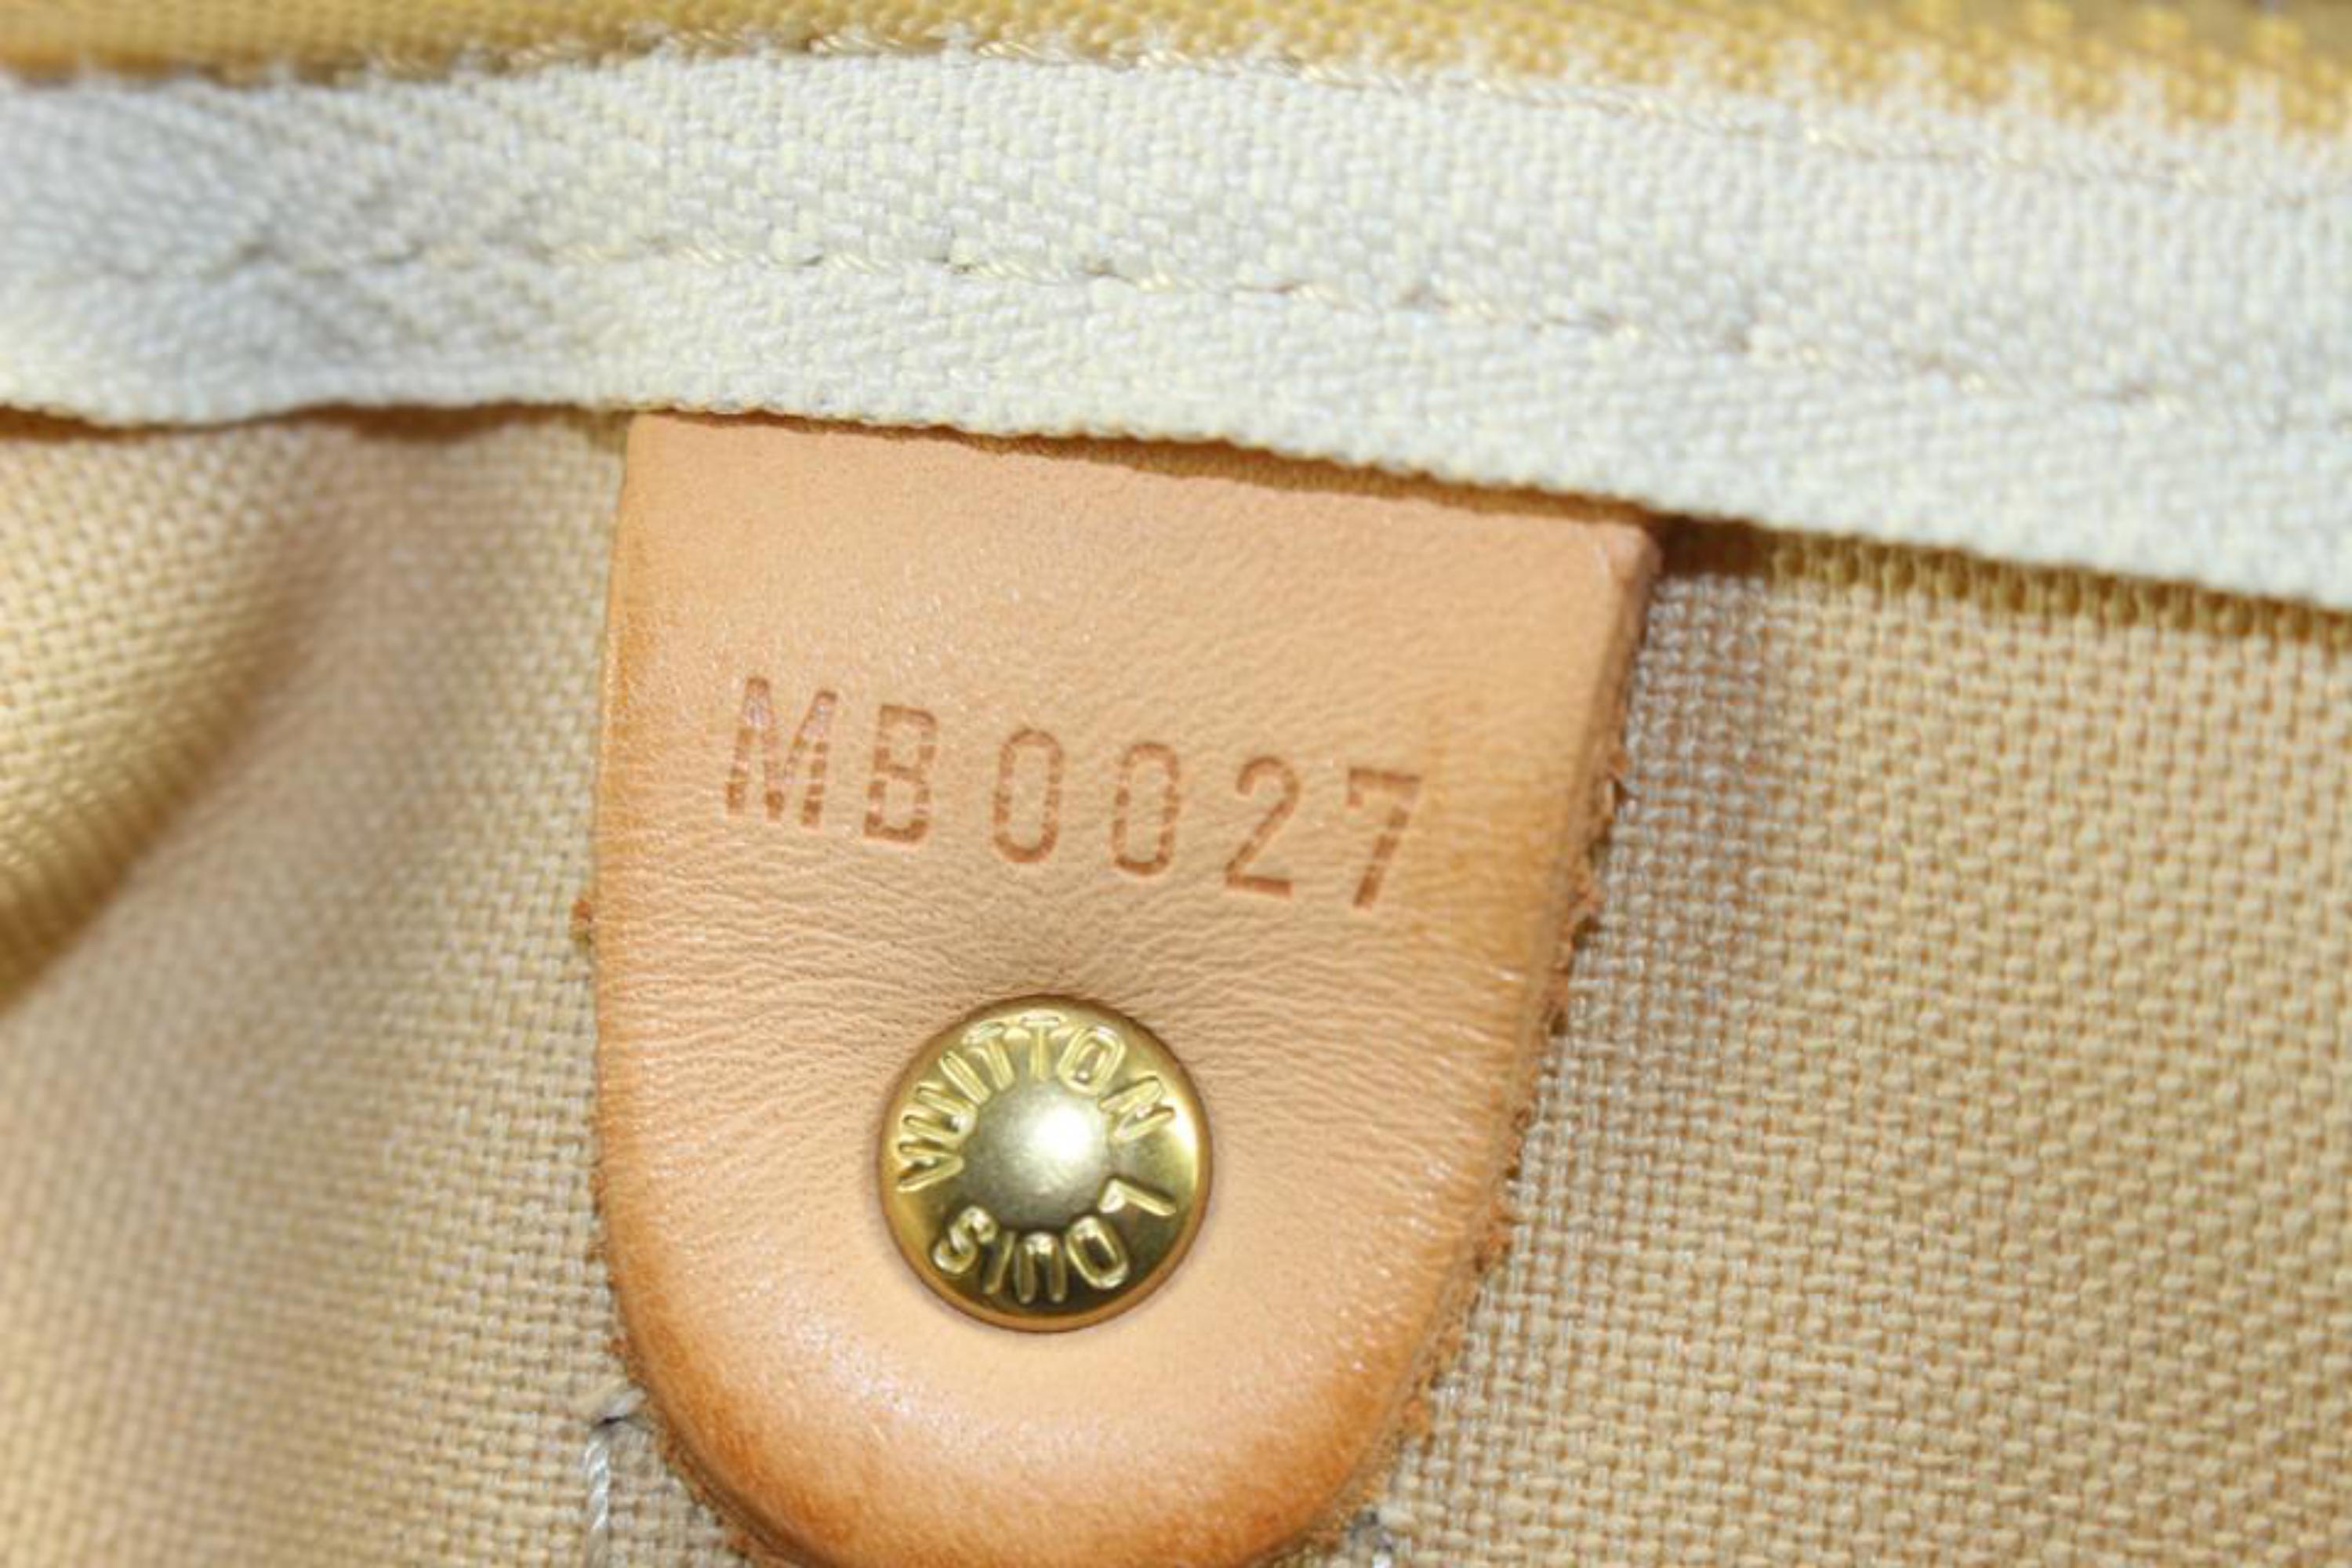 Louis Vuitton Damier Azur Keepall 50 Duffle Bag 15lk616s For Sale 5